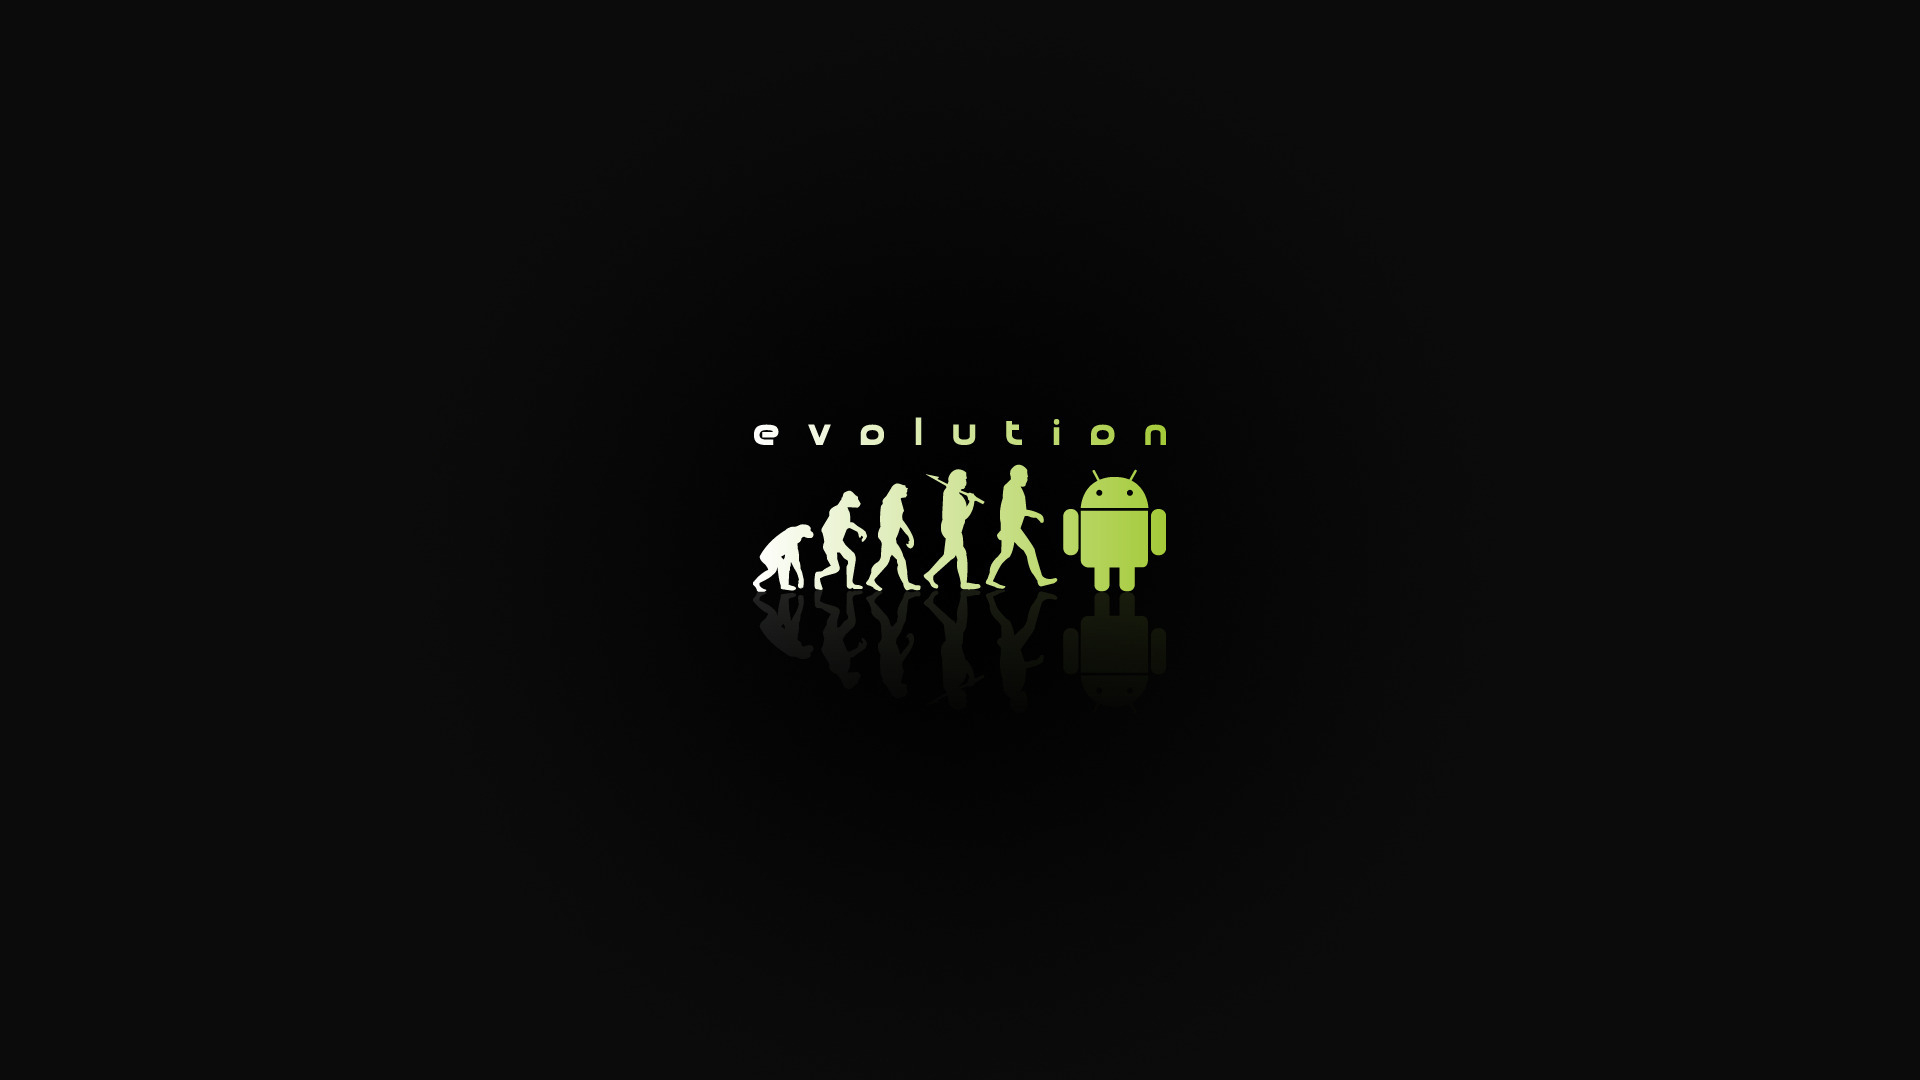 Android Evolution Desktop Wallpaper On Latoro